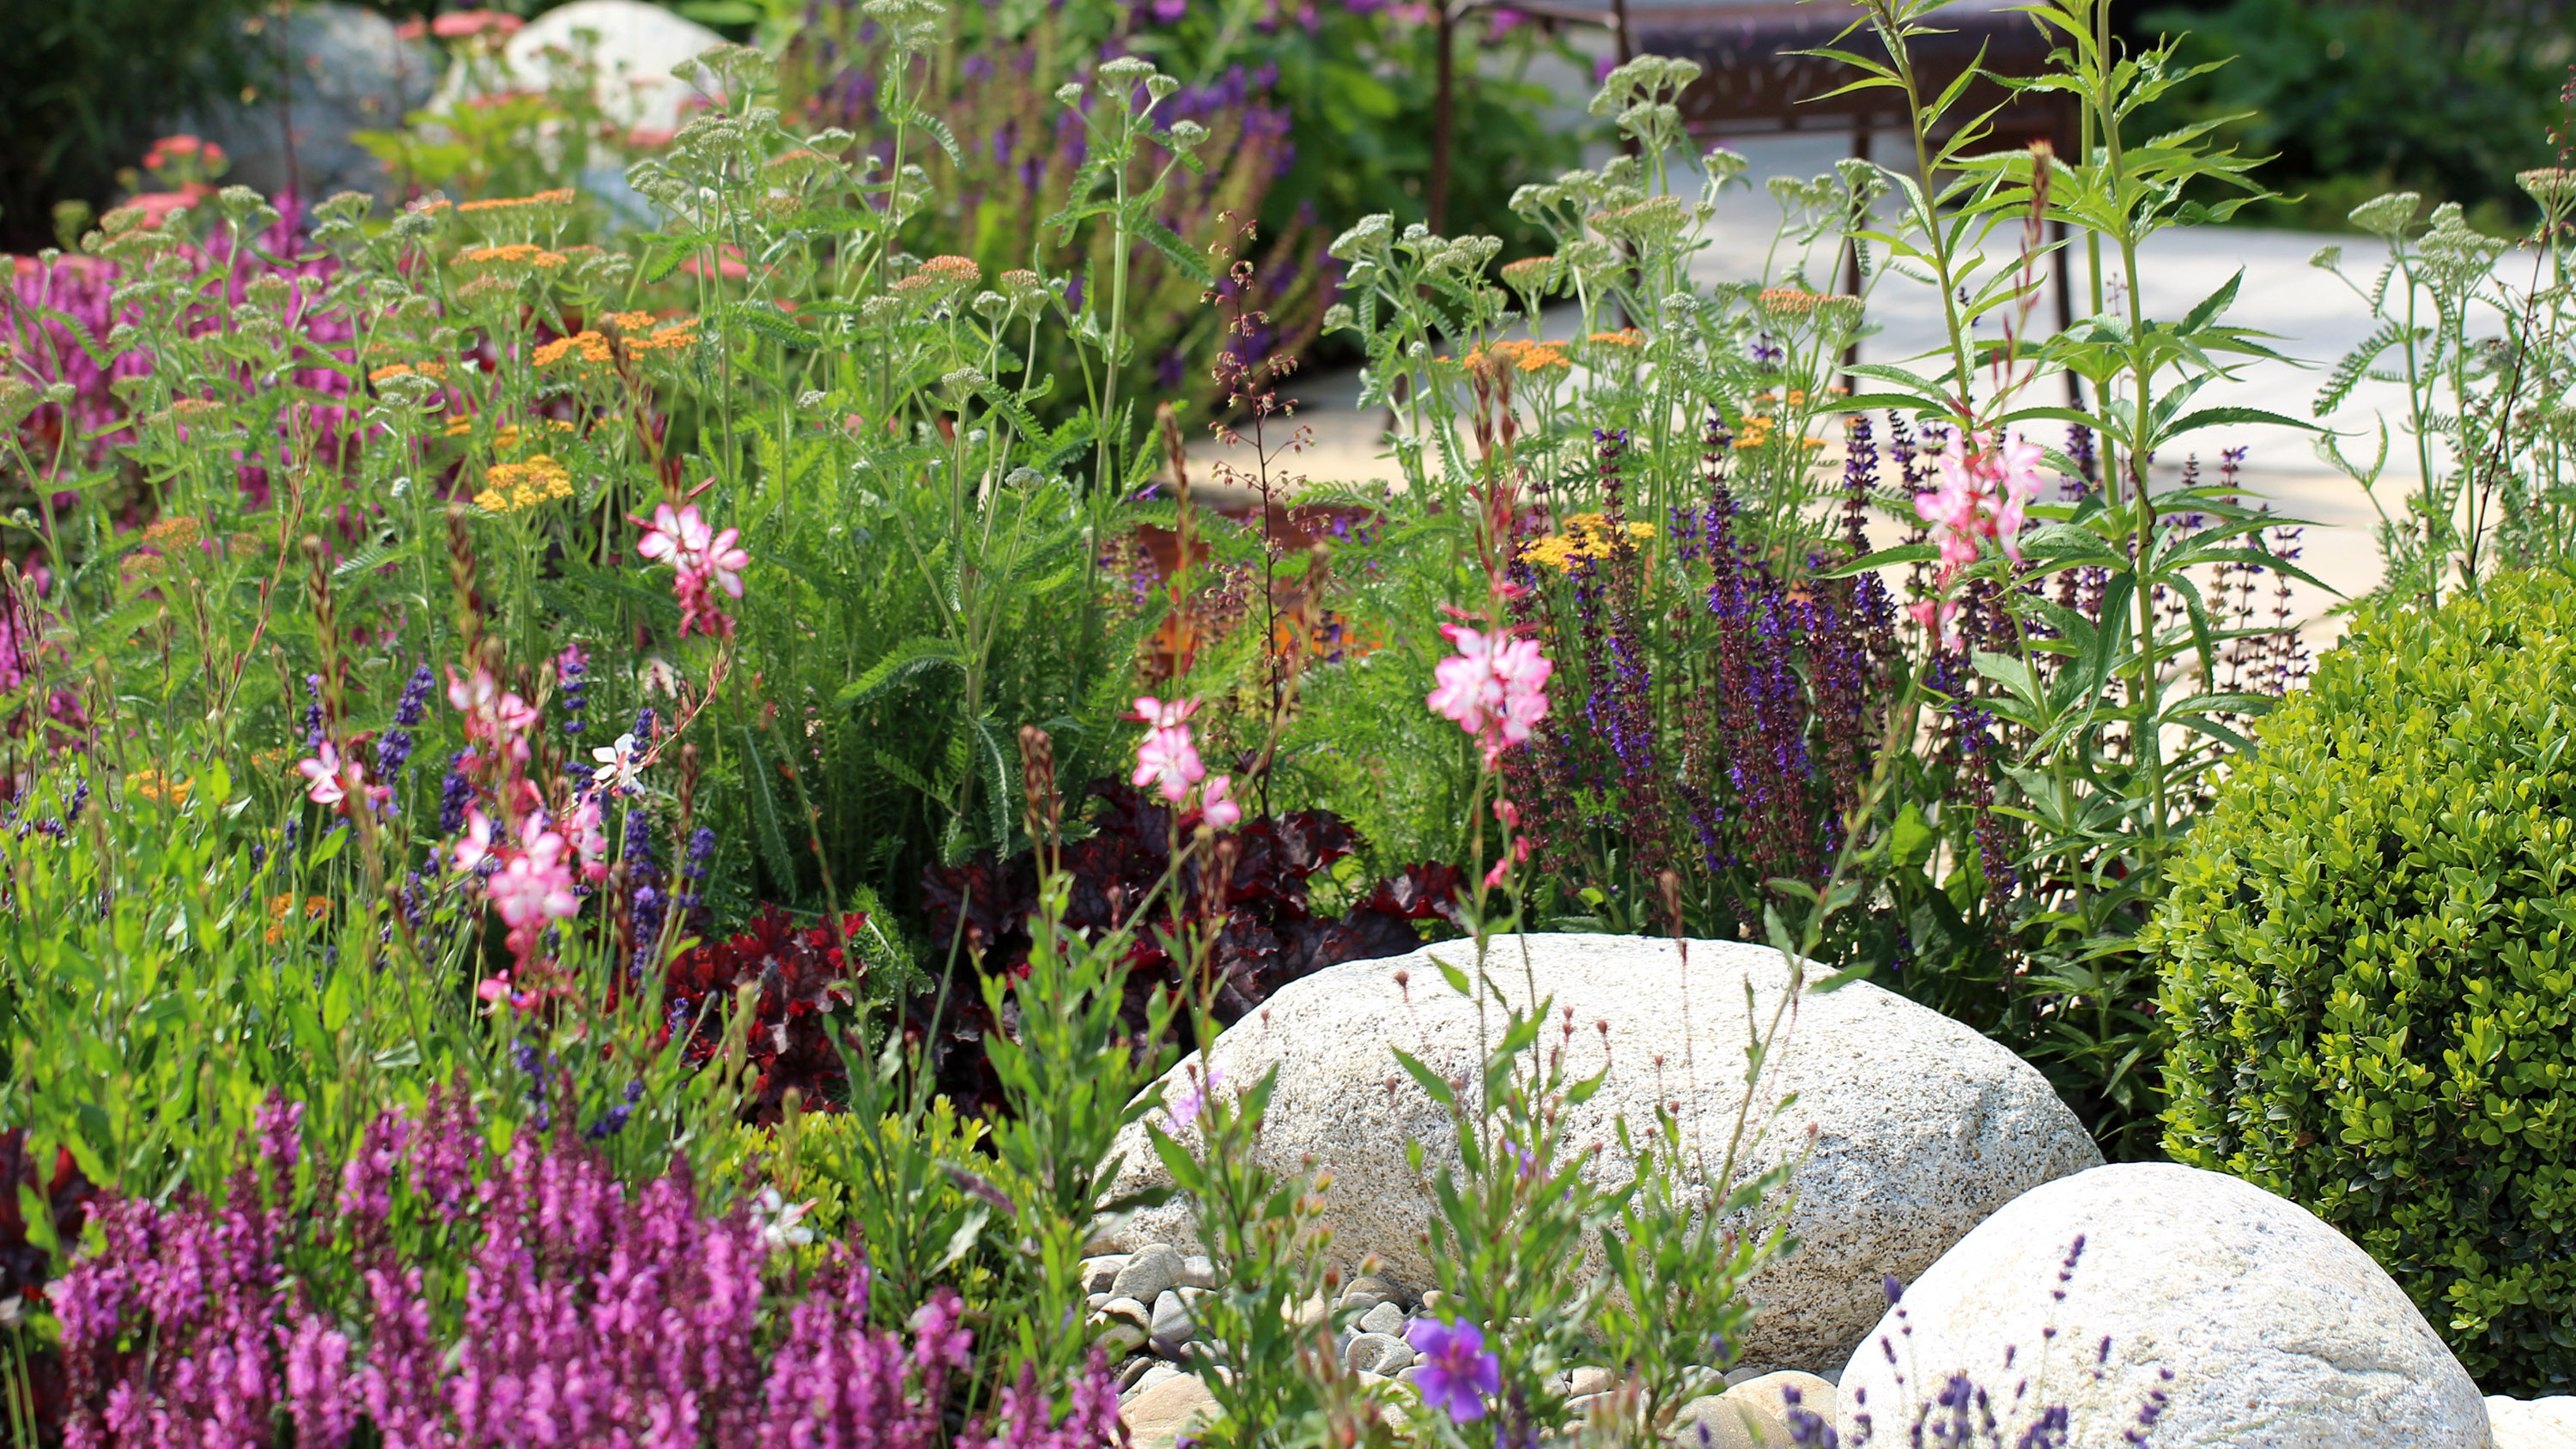 Small rock garden ideas 21 ways with alpine plants, succulents ...